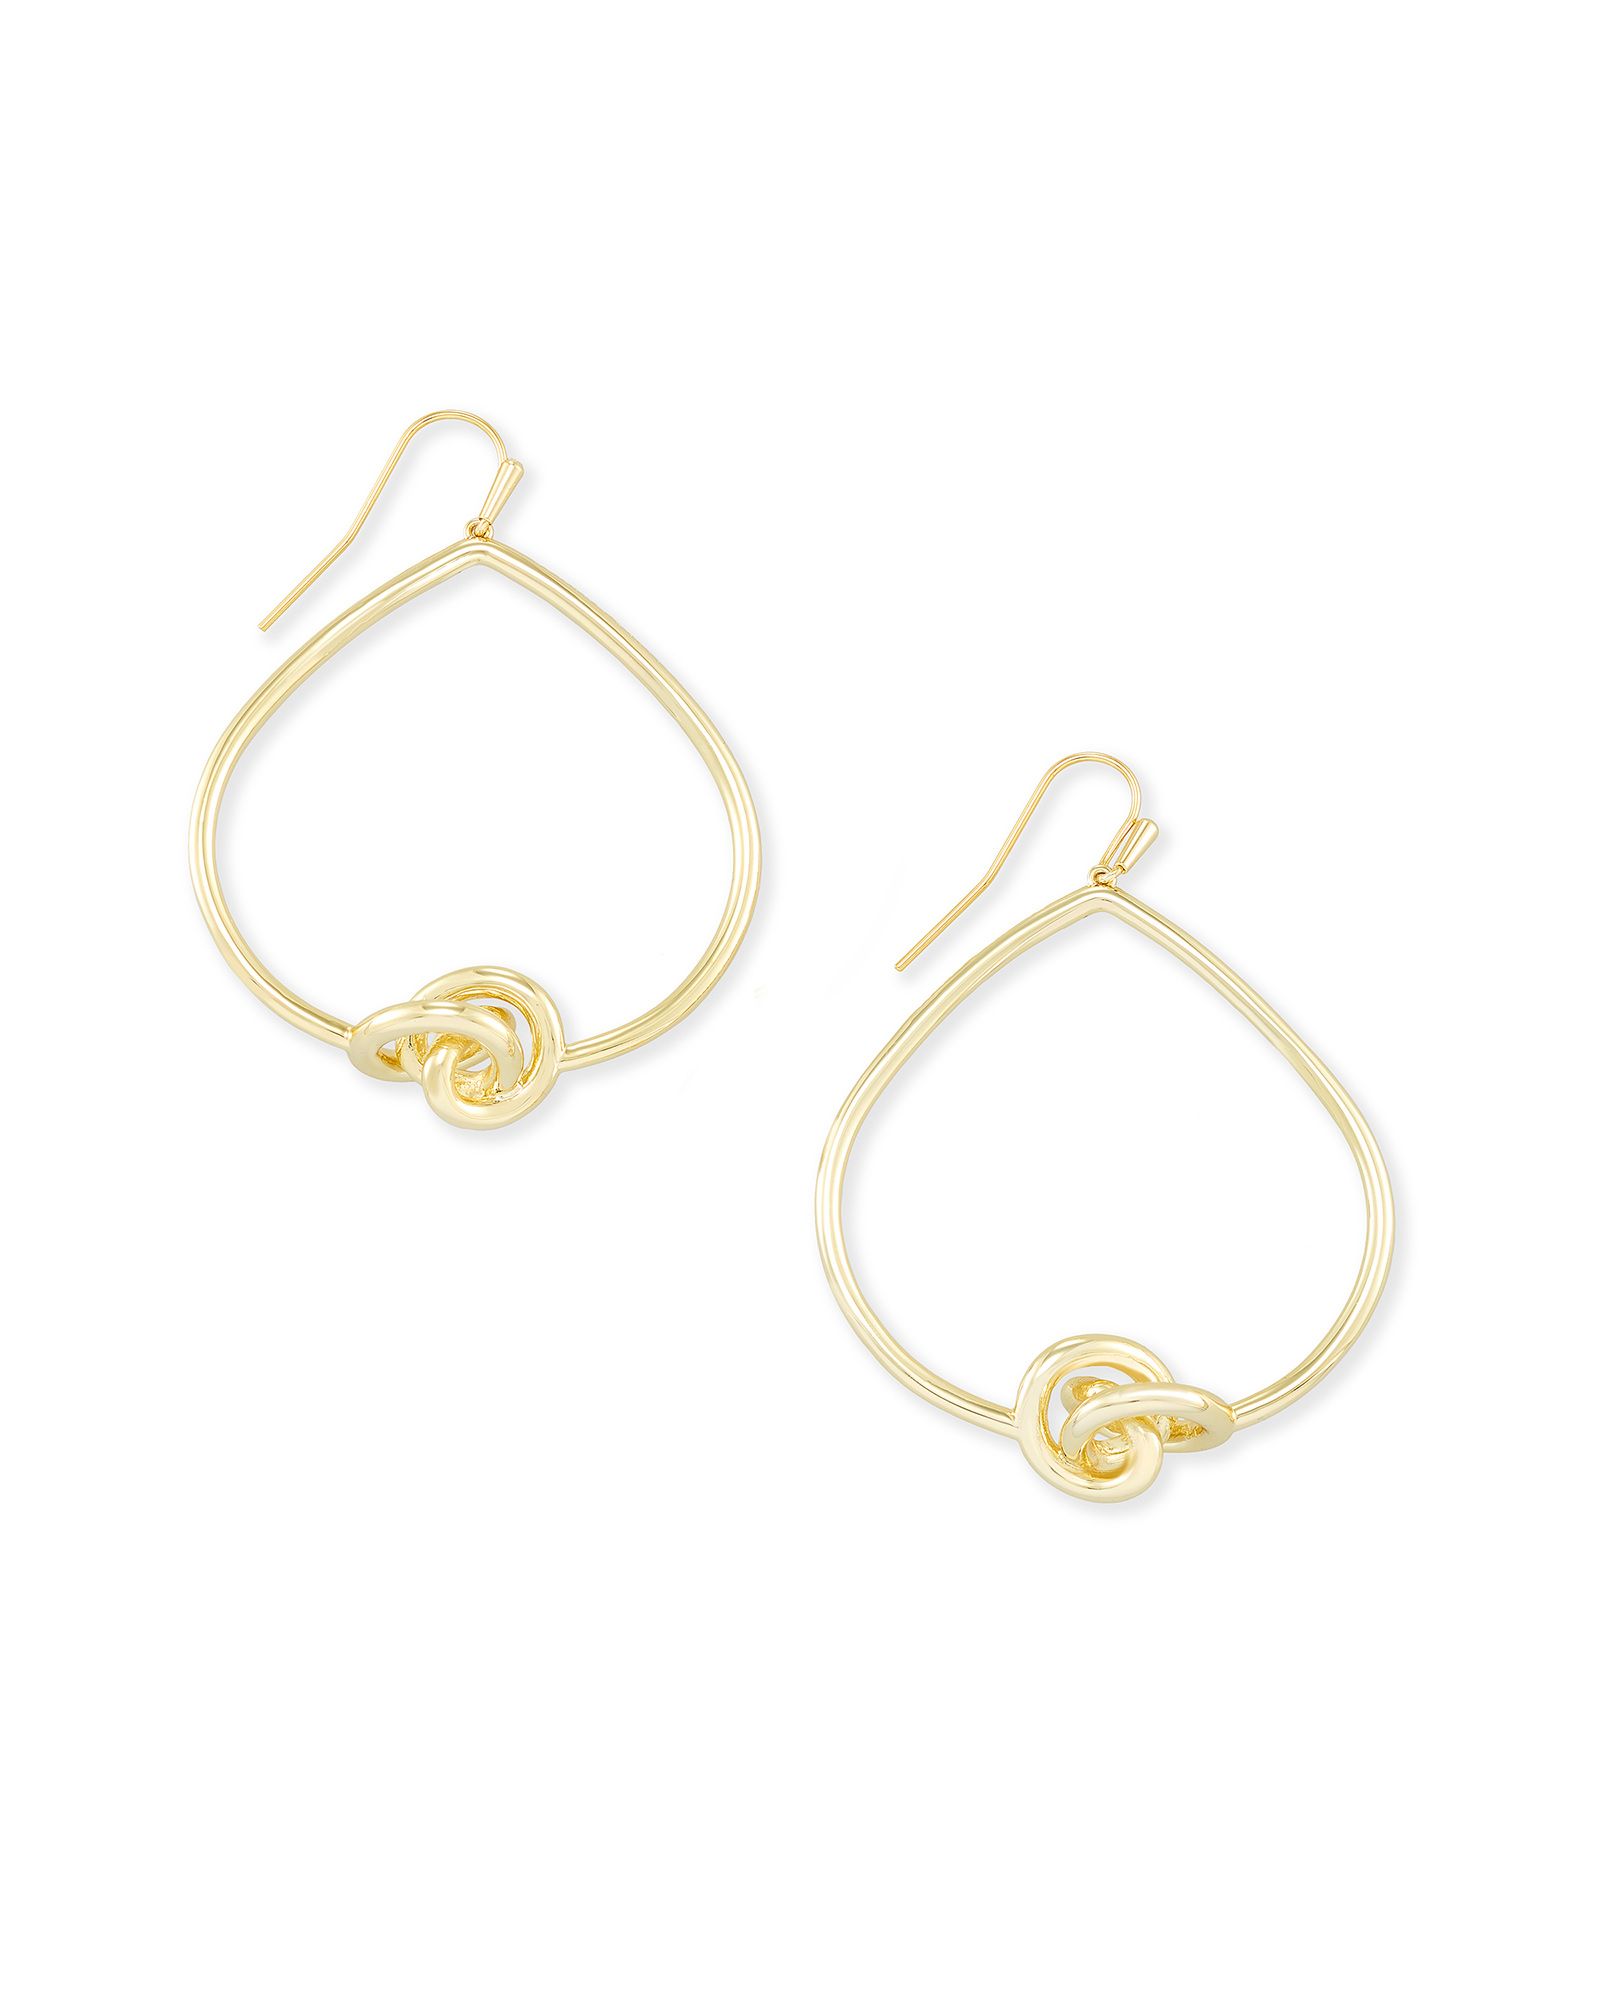 Presleigh Love Knot Open Frame Earrings in Gold | Kendra Scott